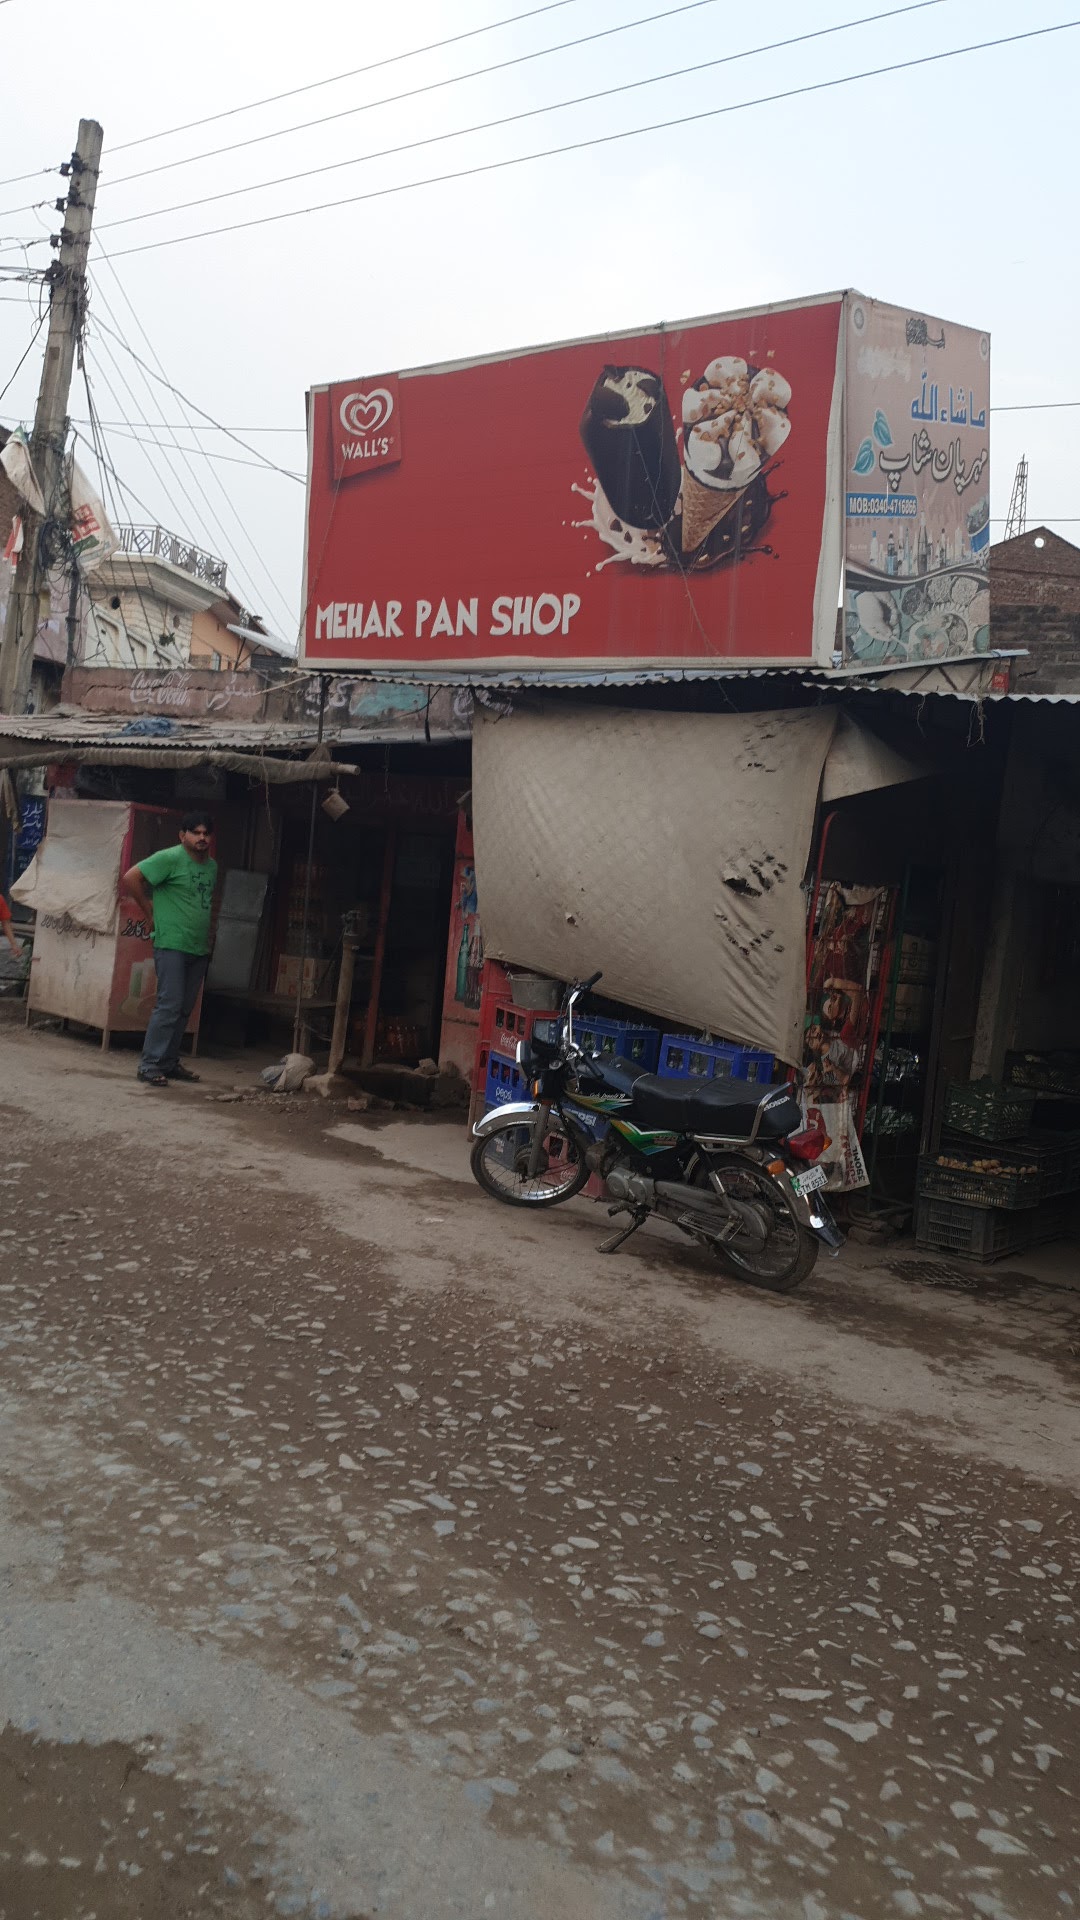 Mehar Pan Shop